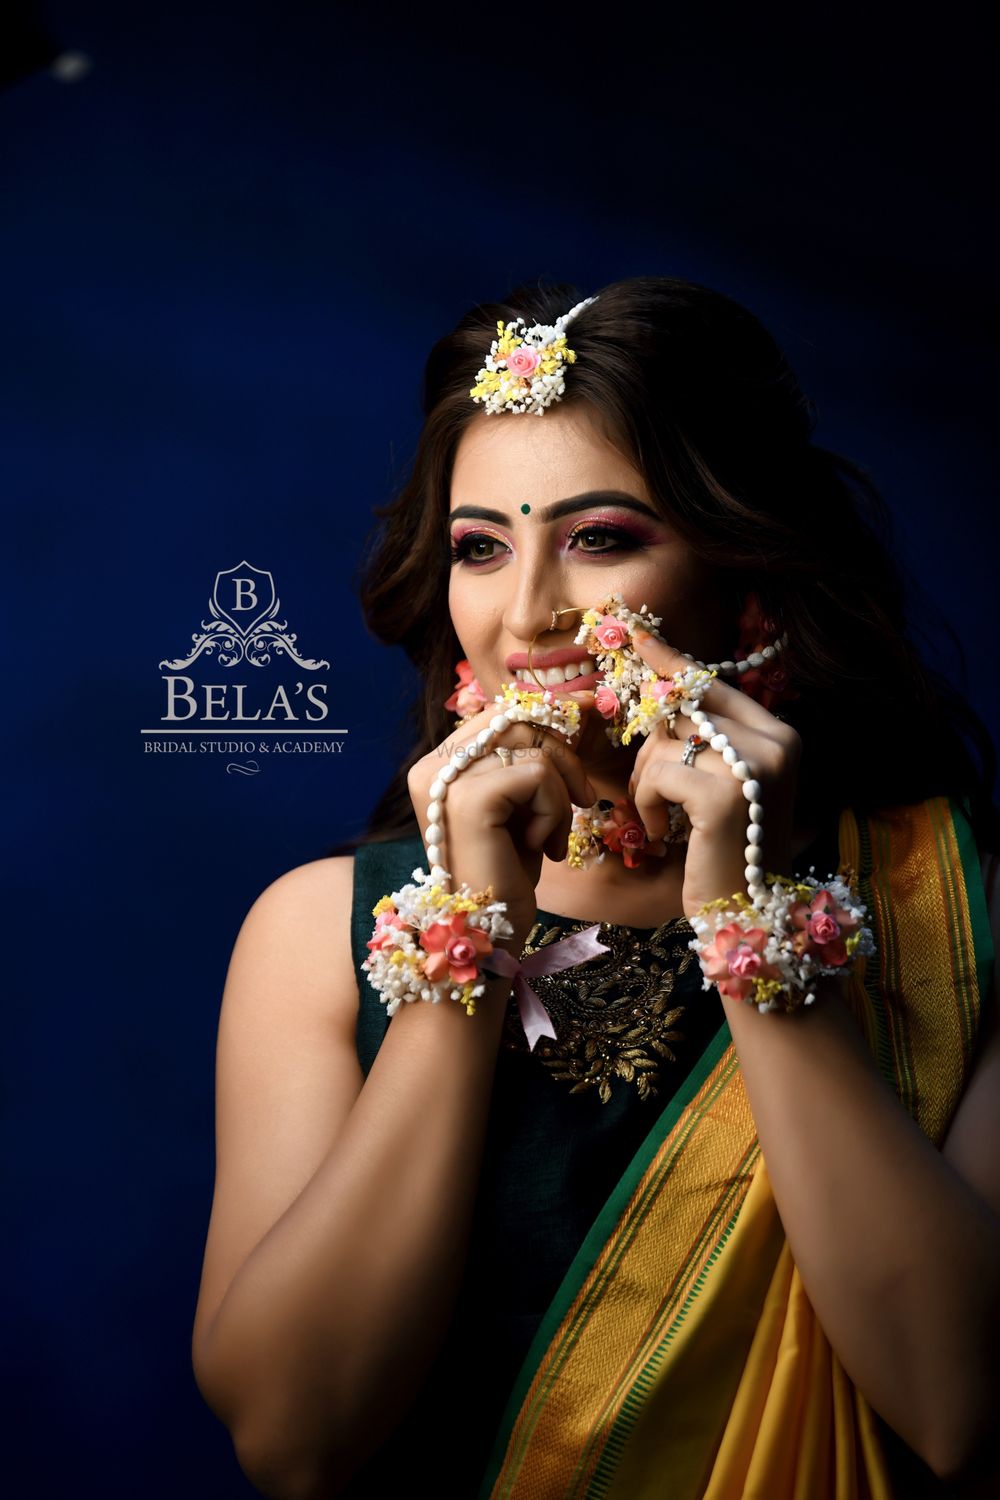 Photo From haldi brides - By Bela's Bridal Studio & Academy